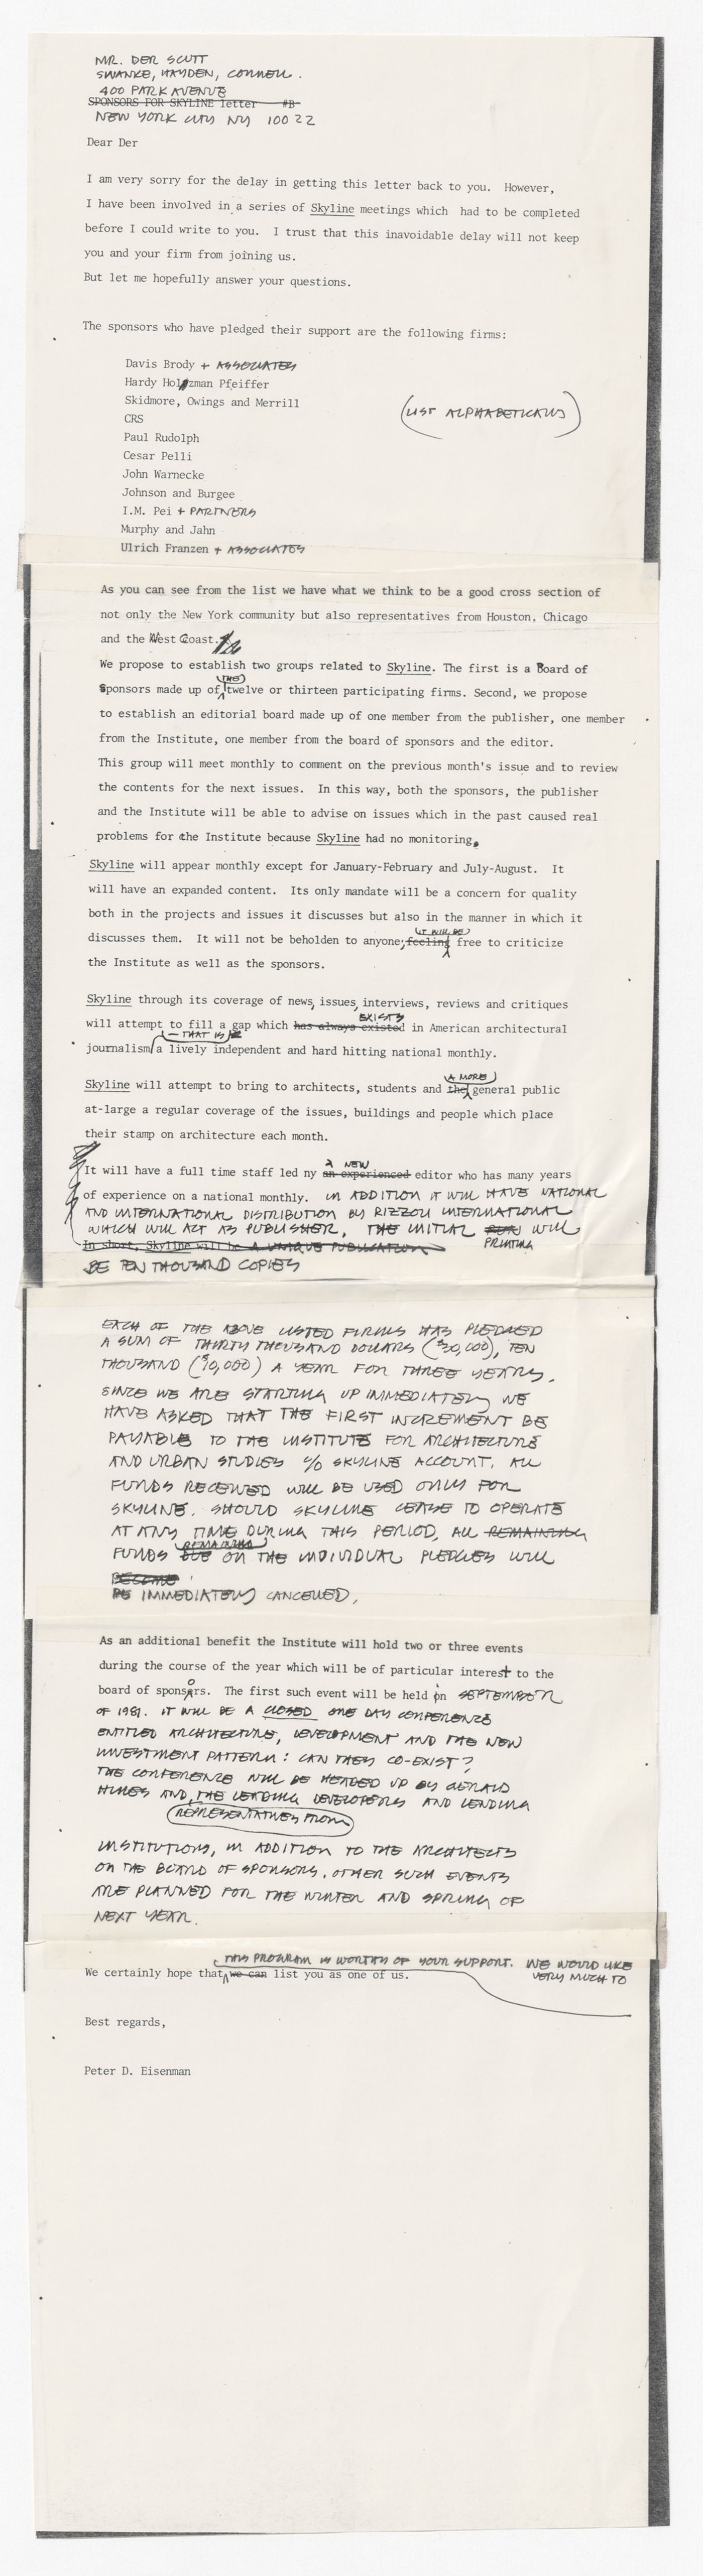 Draft sollicitation letter from Peter D. Eisenman to Der Scutt with annotations by Peter D. Eisenman